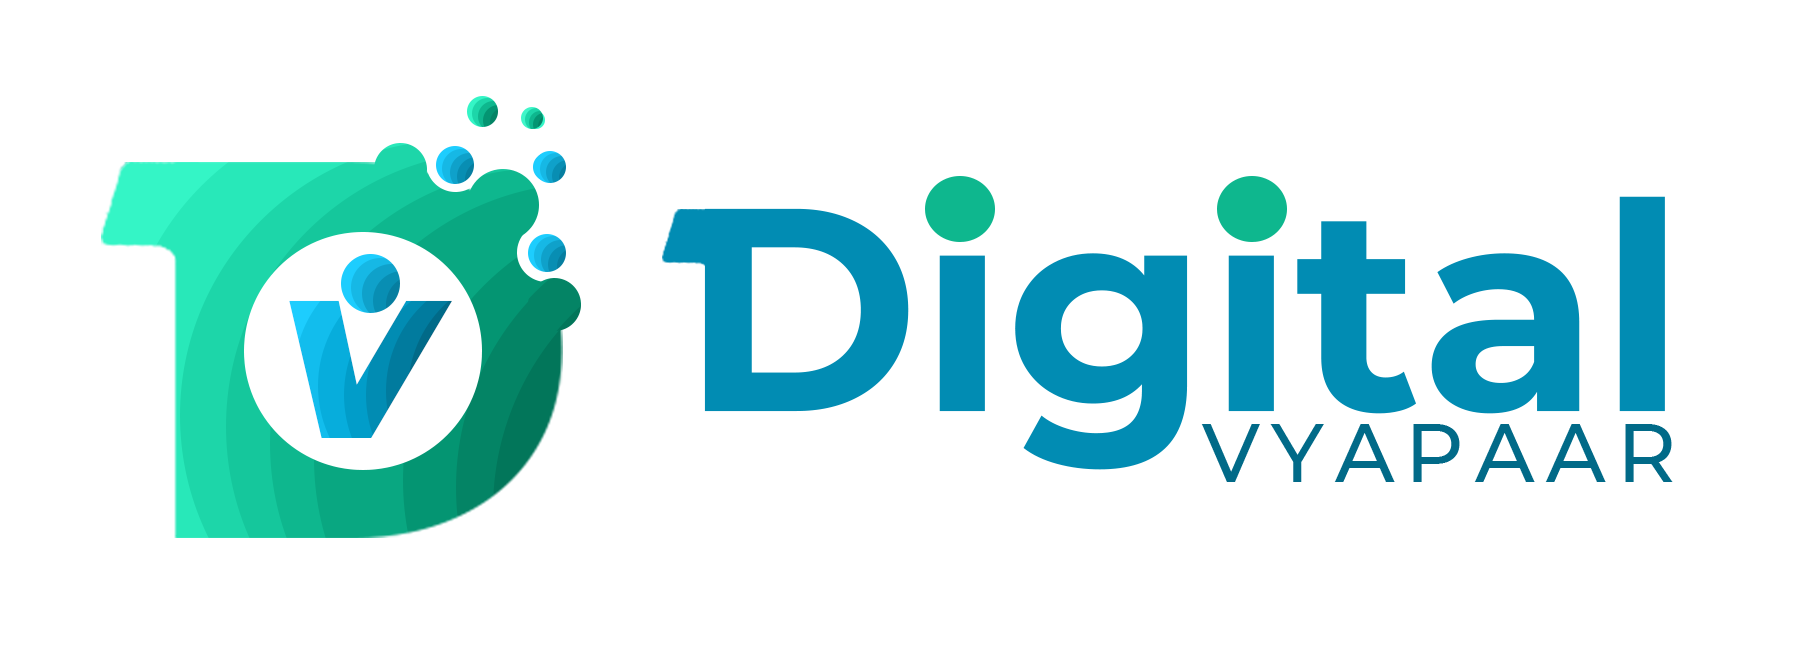 Digital Vayapaar Logo